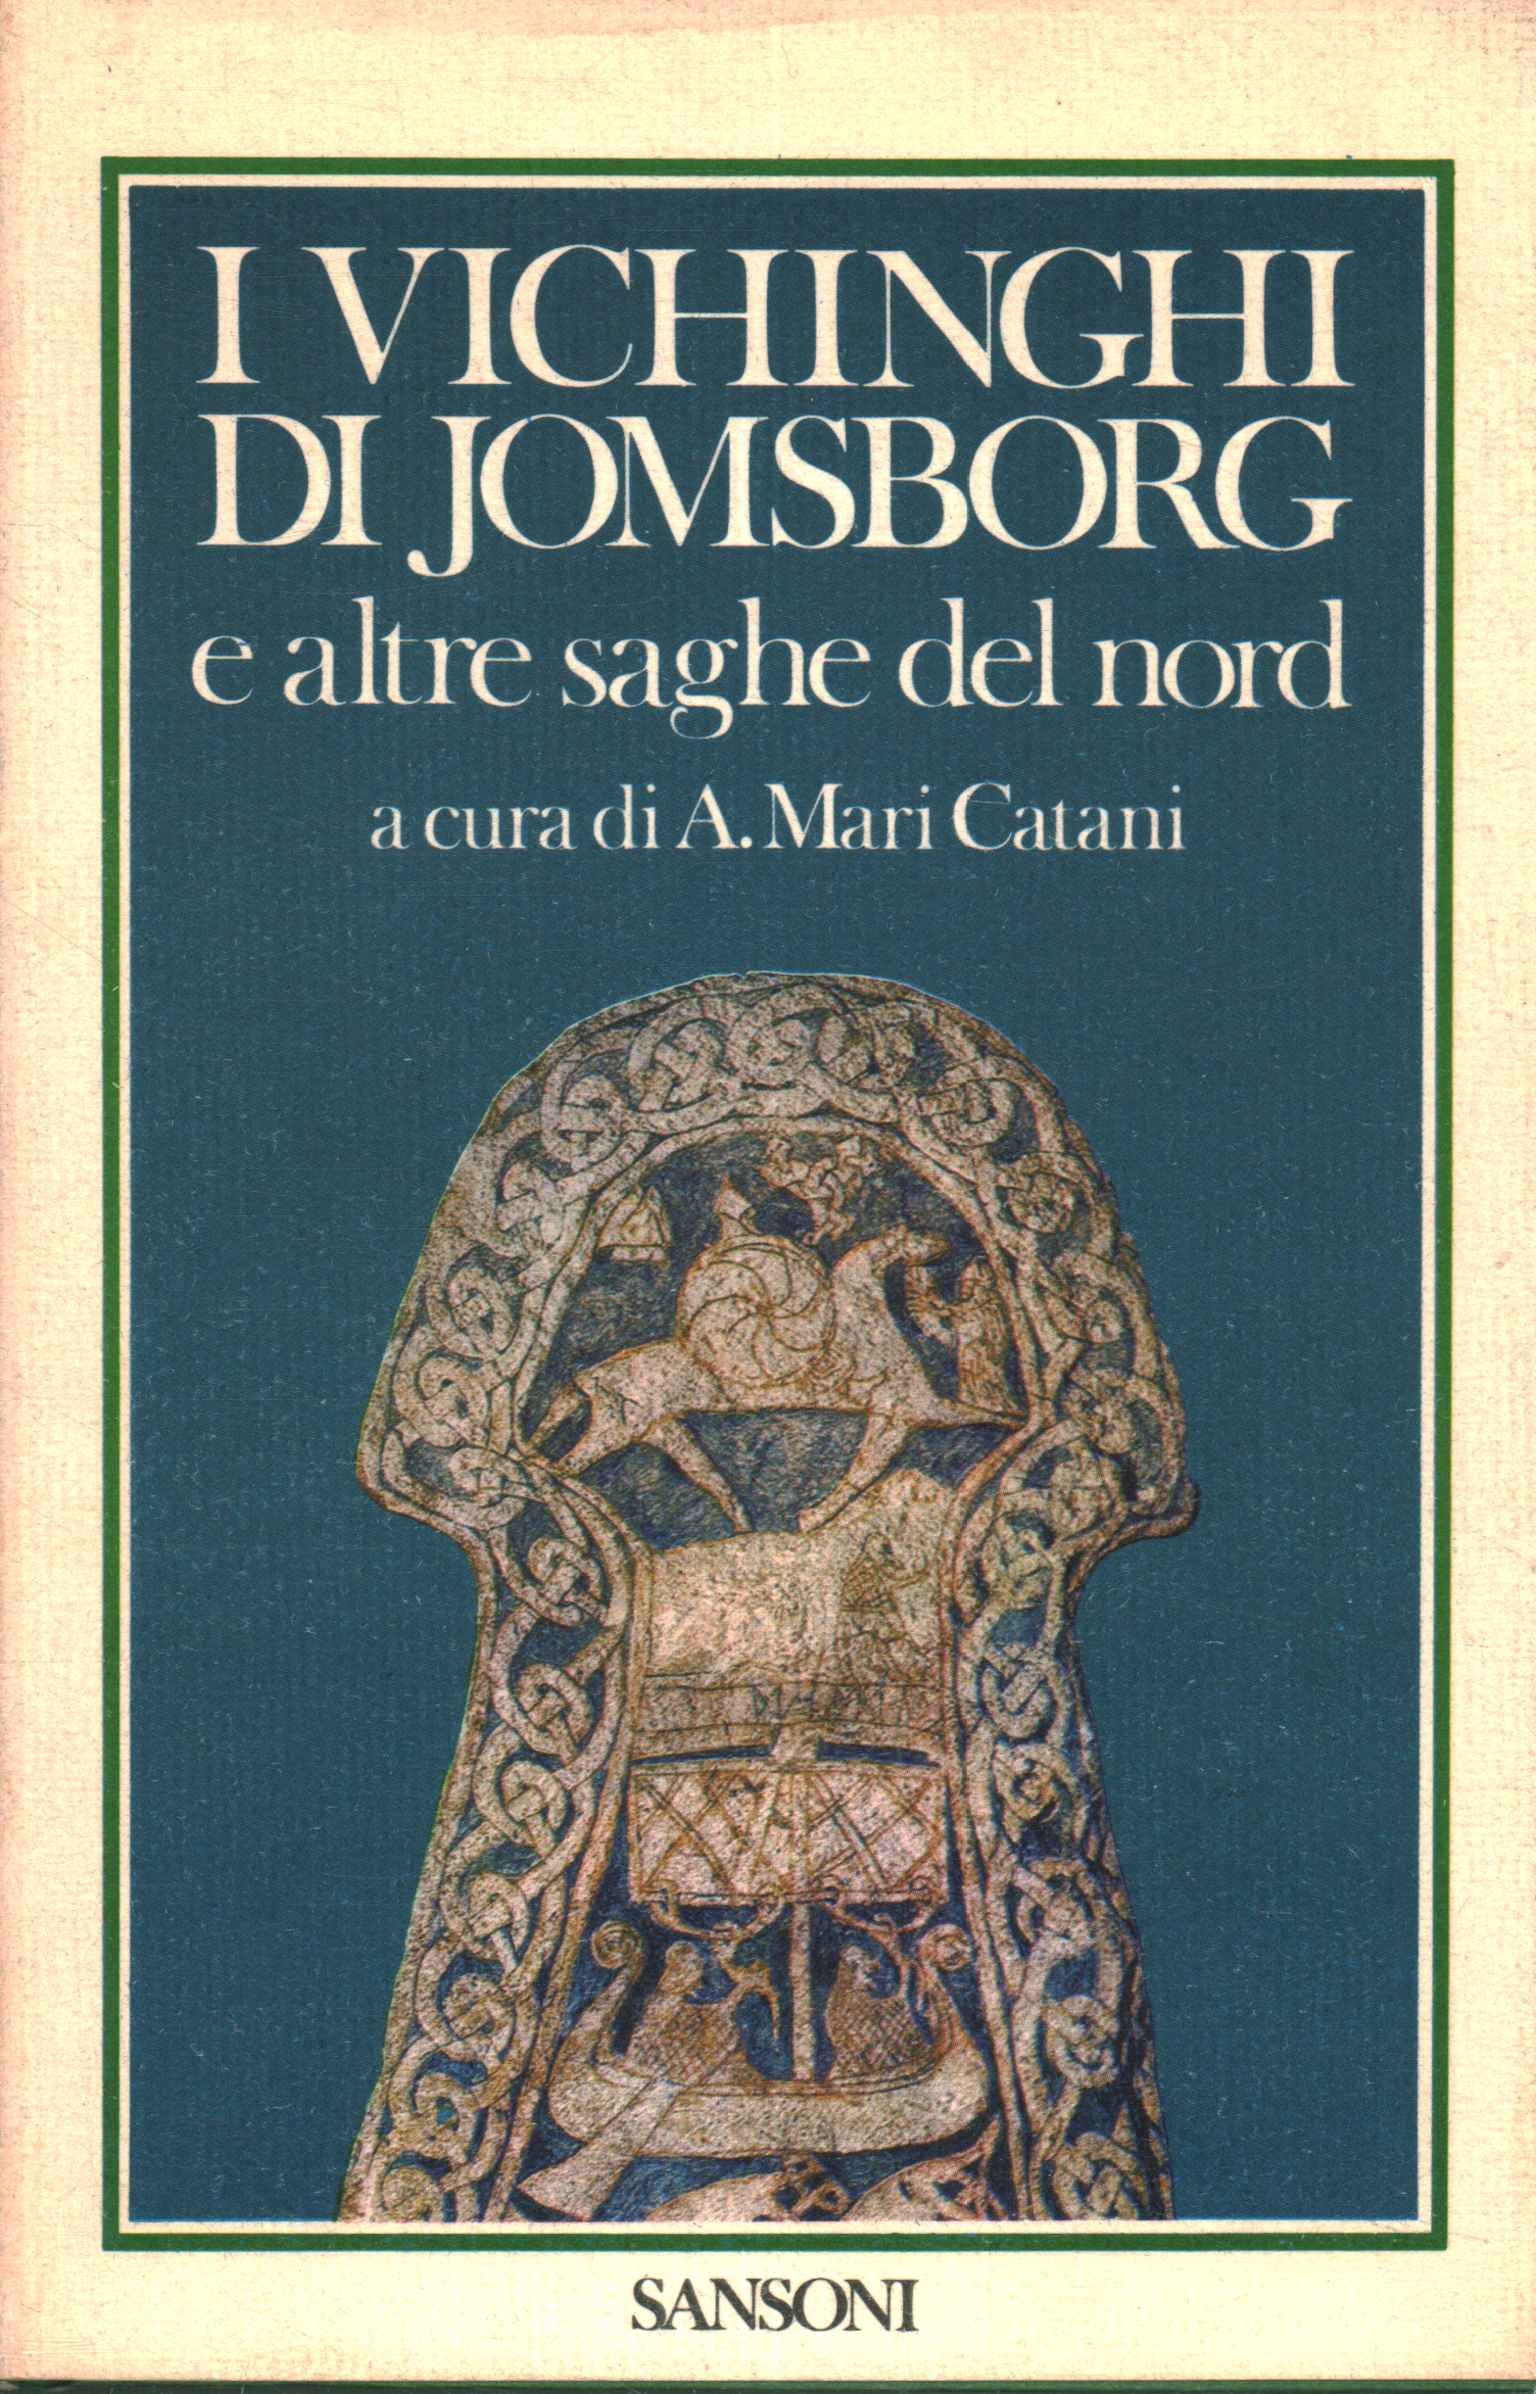 The Vikings of Jomsborg